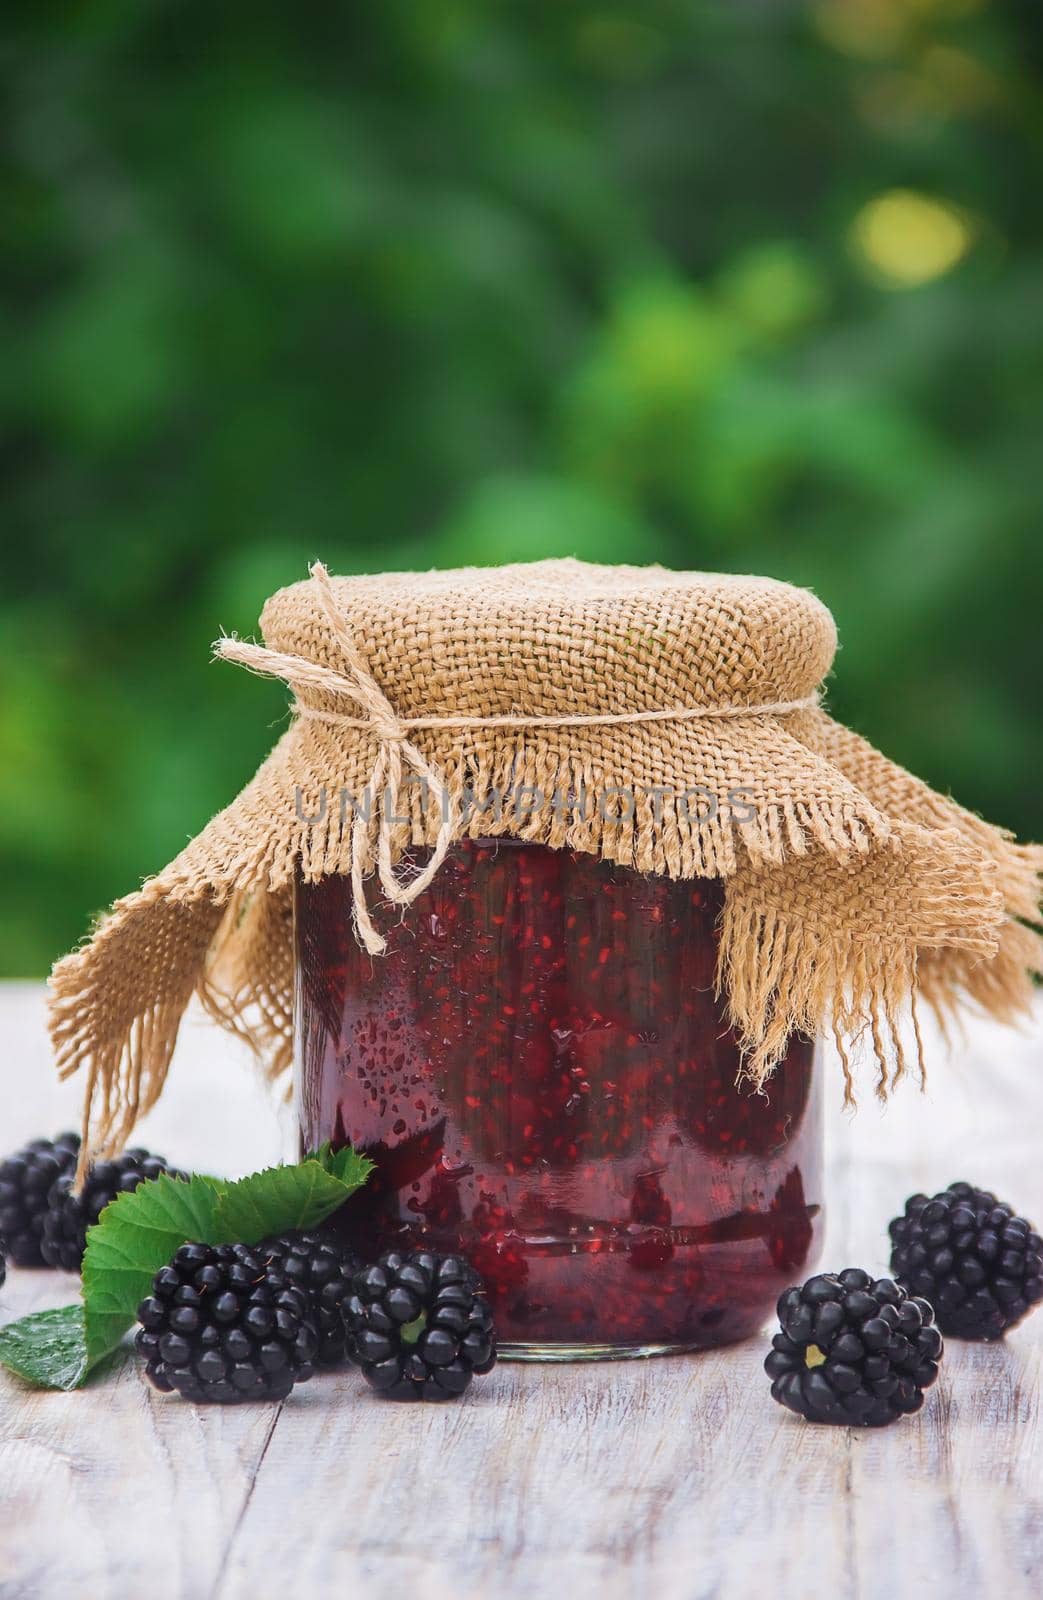 homemade jam with blackberry. Preparation. Selective focus. by yanadjana